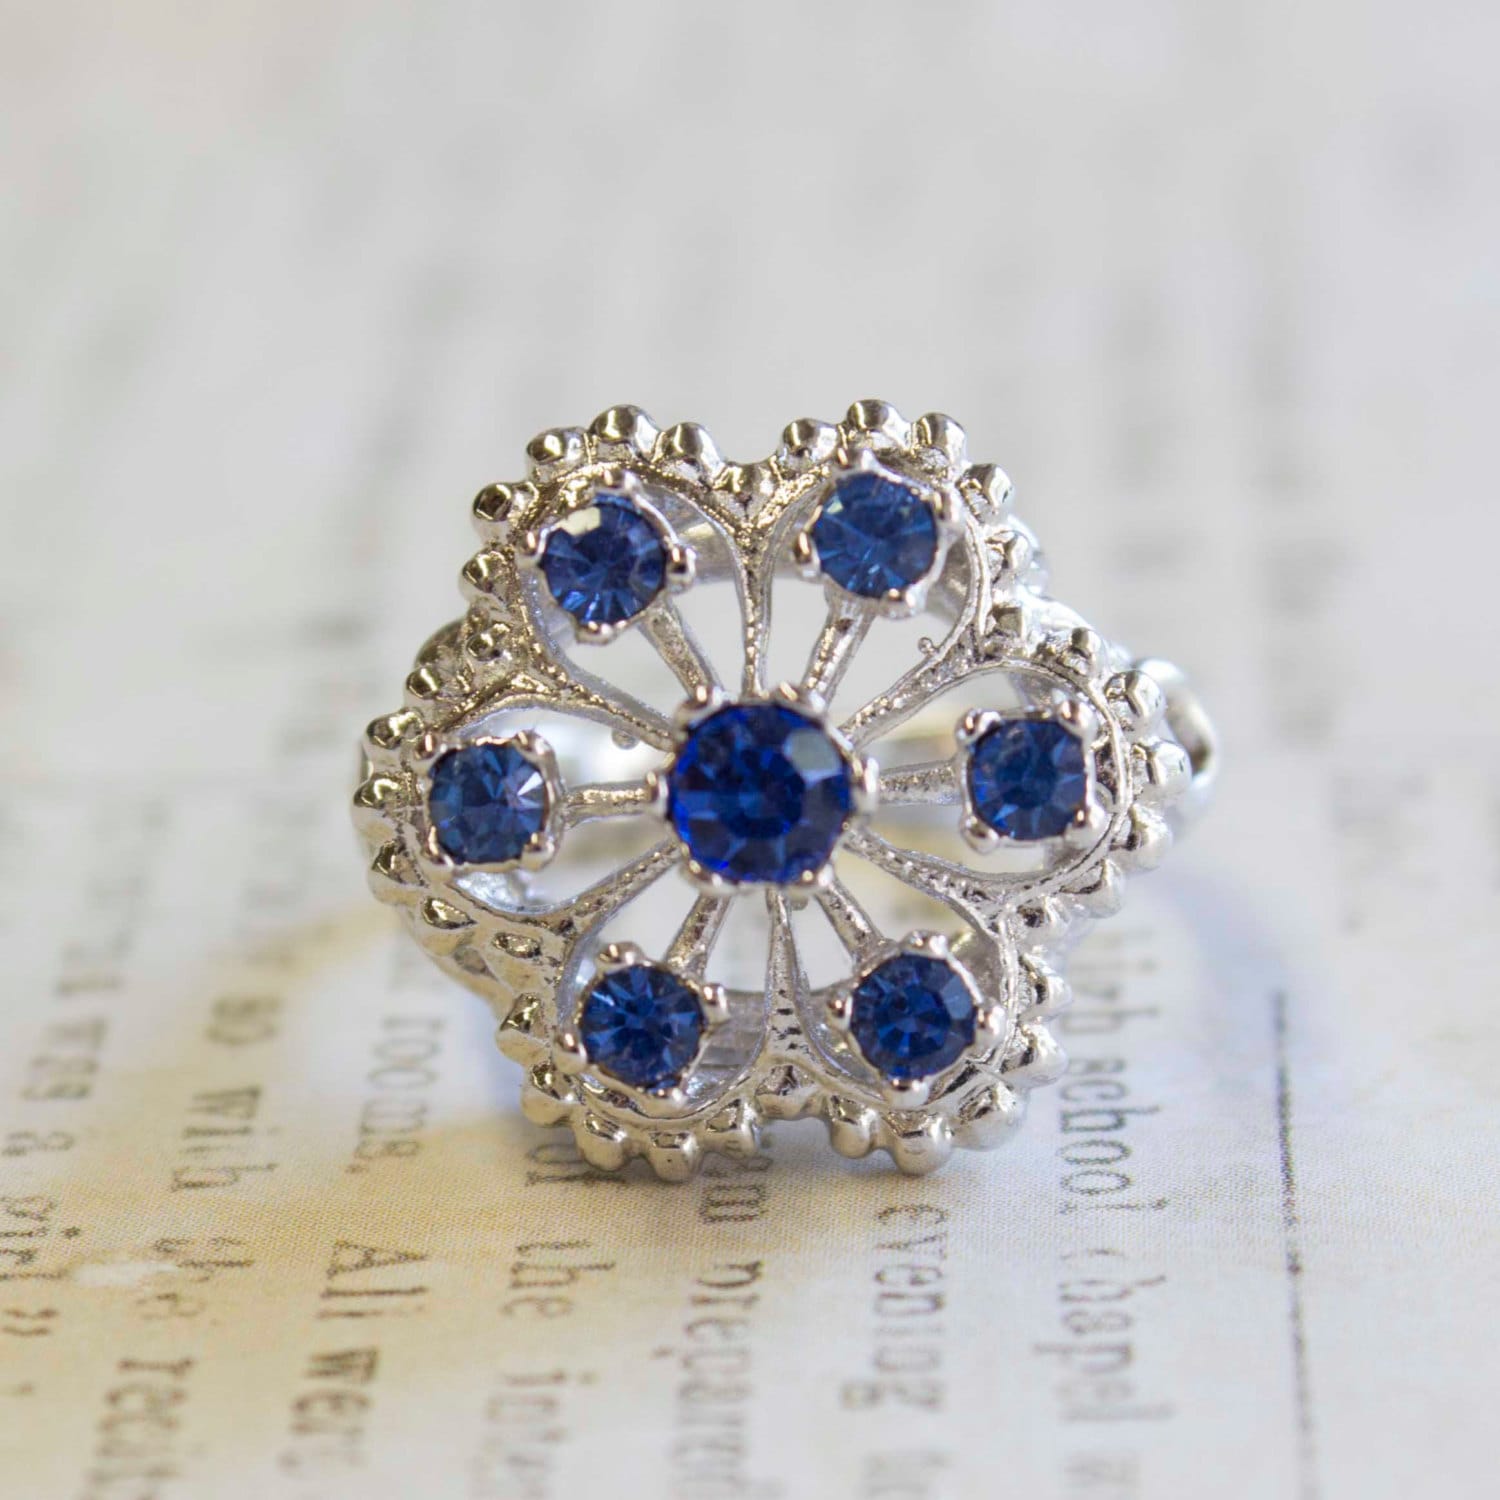 Vintage Ring Filigree Style 18k White Gold Ring Blue Tanzanite Swarovski Crystals Edwardian Style Antique #R103 - Limited Stock - Never Worn